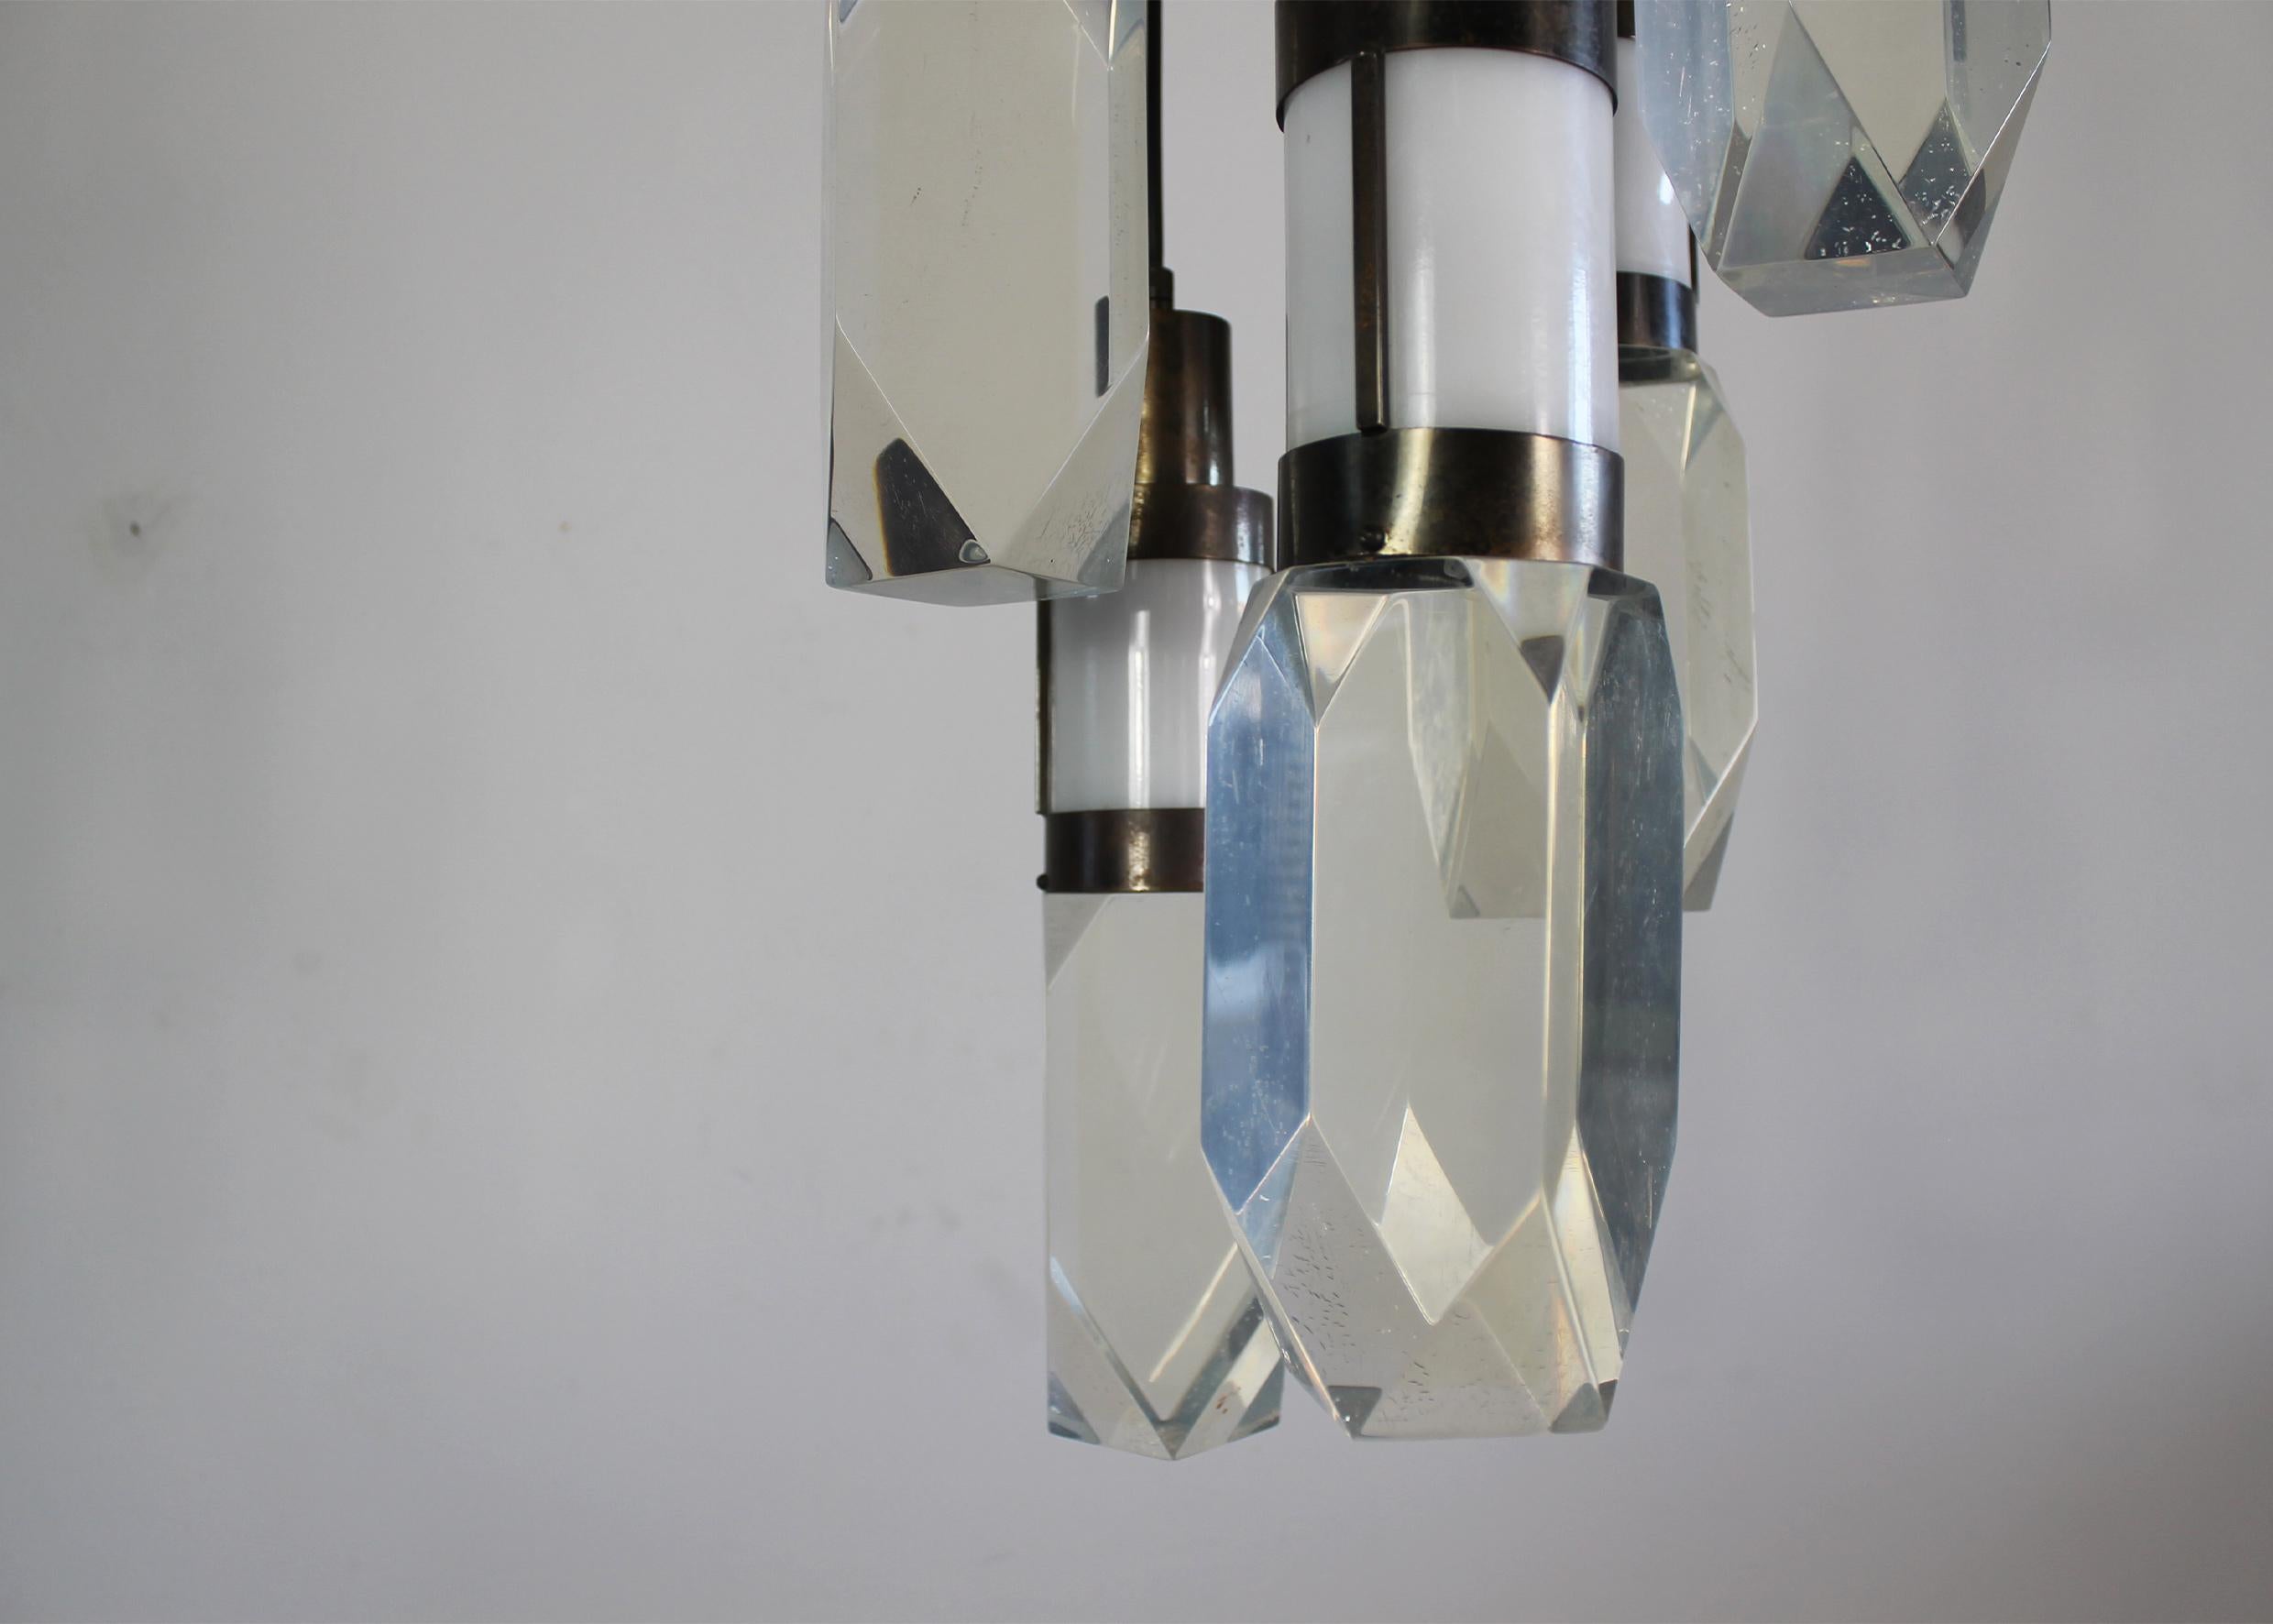 Italian Gaetano Missaglia Ceiling Lamp with Lampshades in Lucite Plexiglass 1970s Italy For Sale